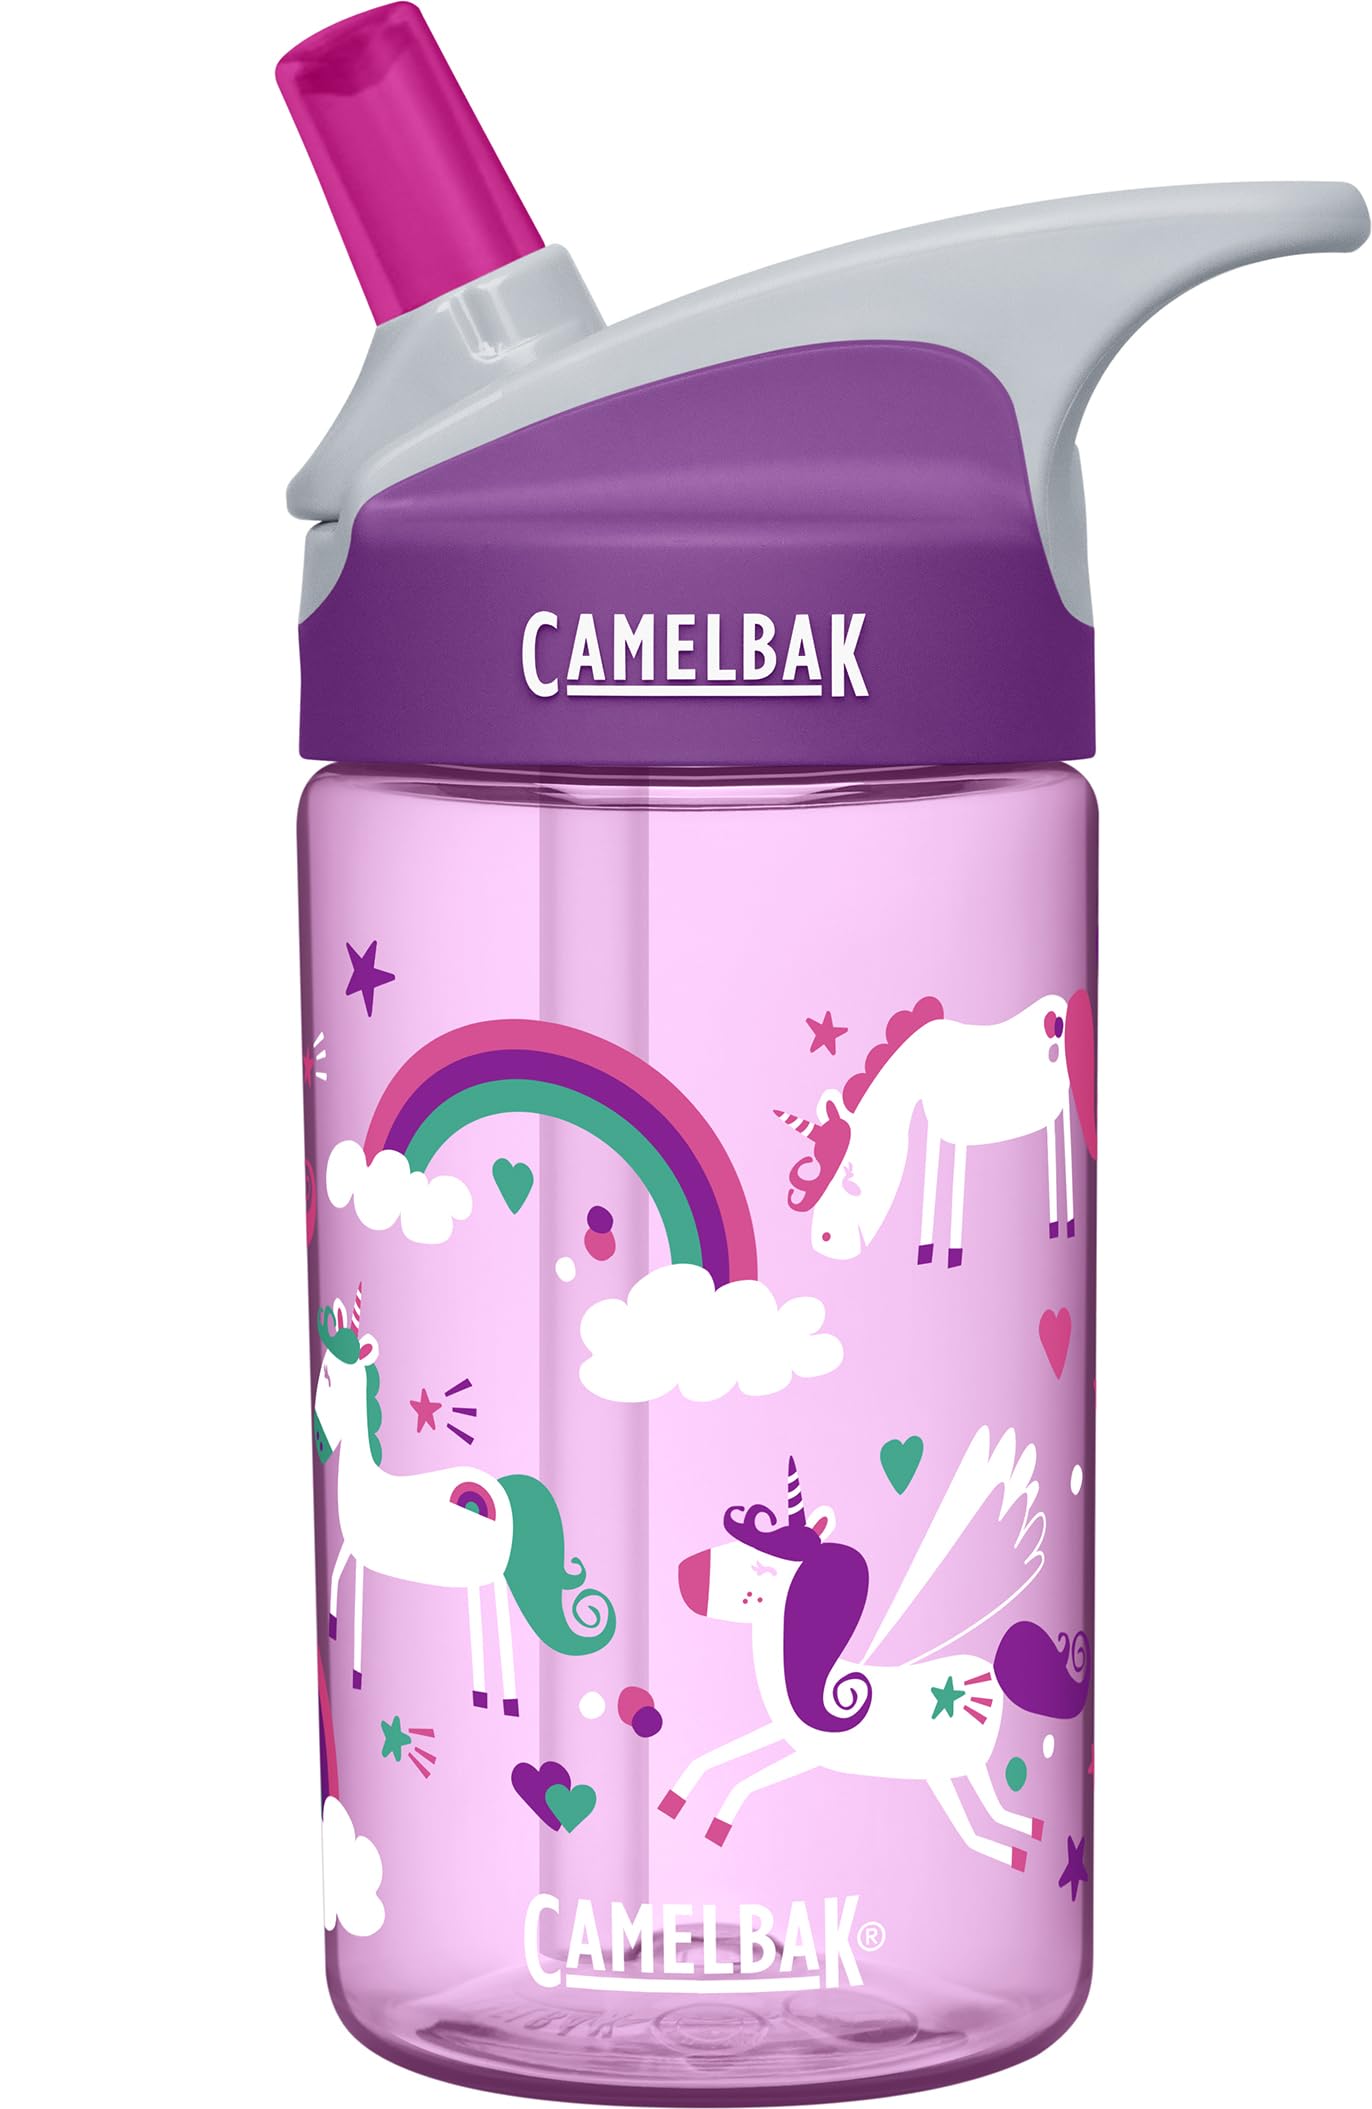 CamelBak Eddy Kids Water Bottle Kids Big Bite Valve - Spill Proof - Water Bottle for Kids - BPA-Free Water Bottle